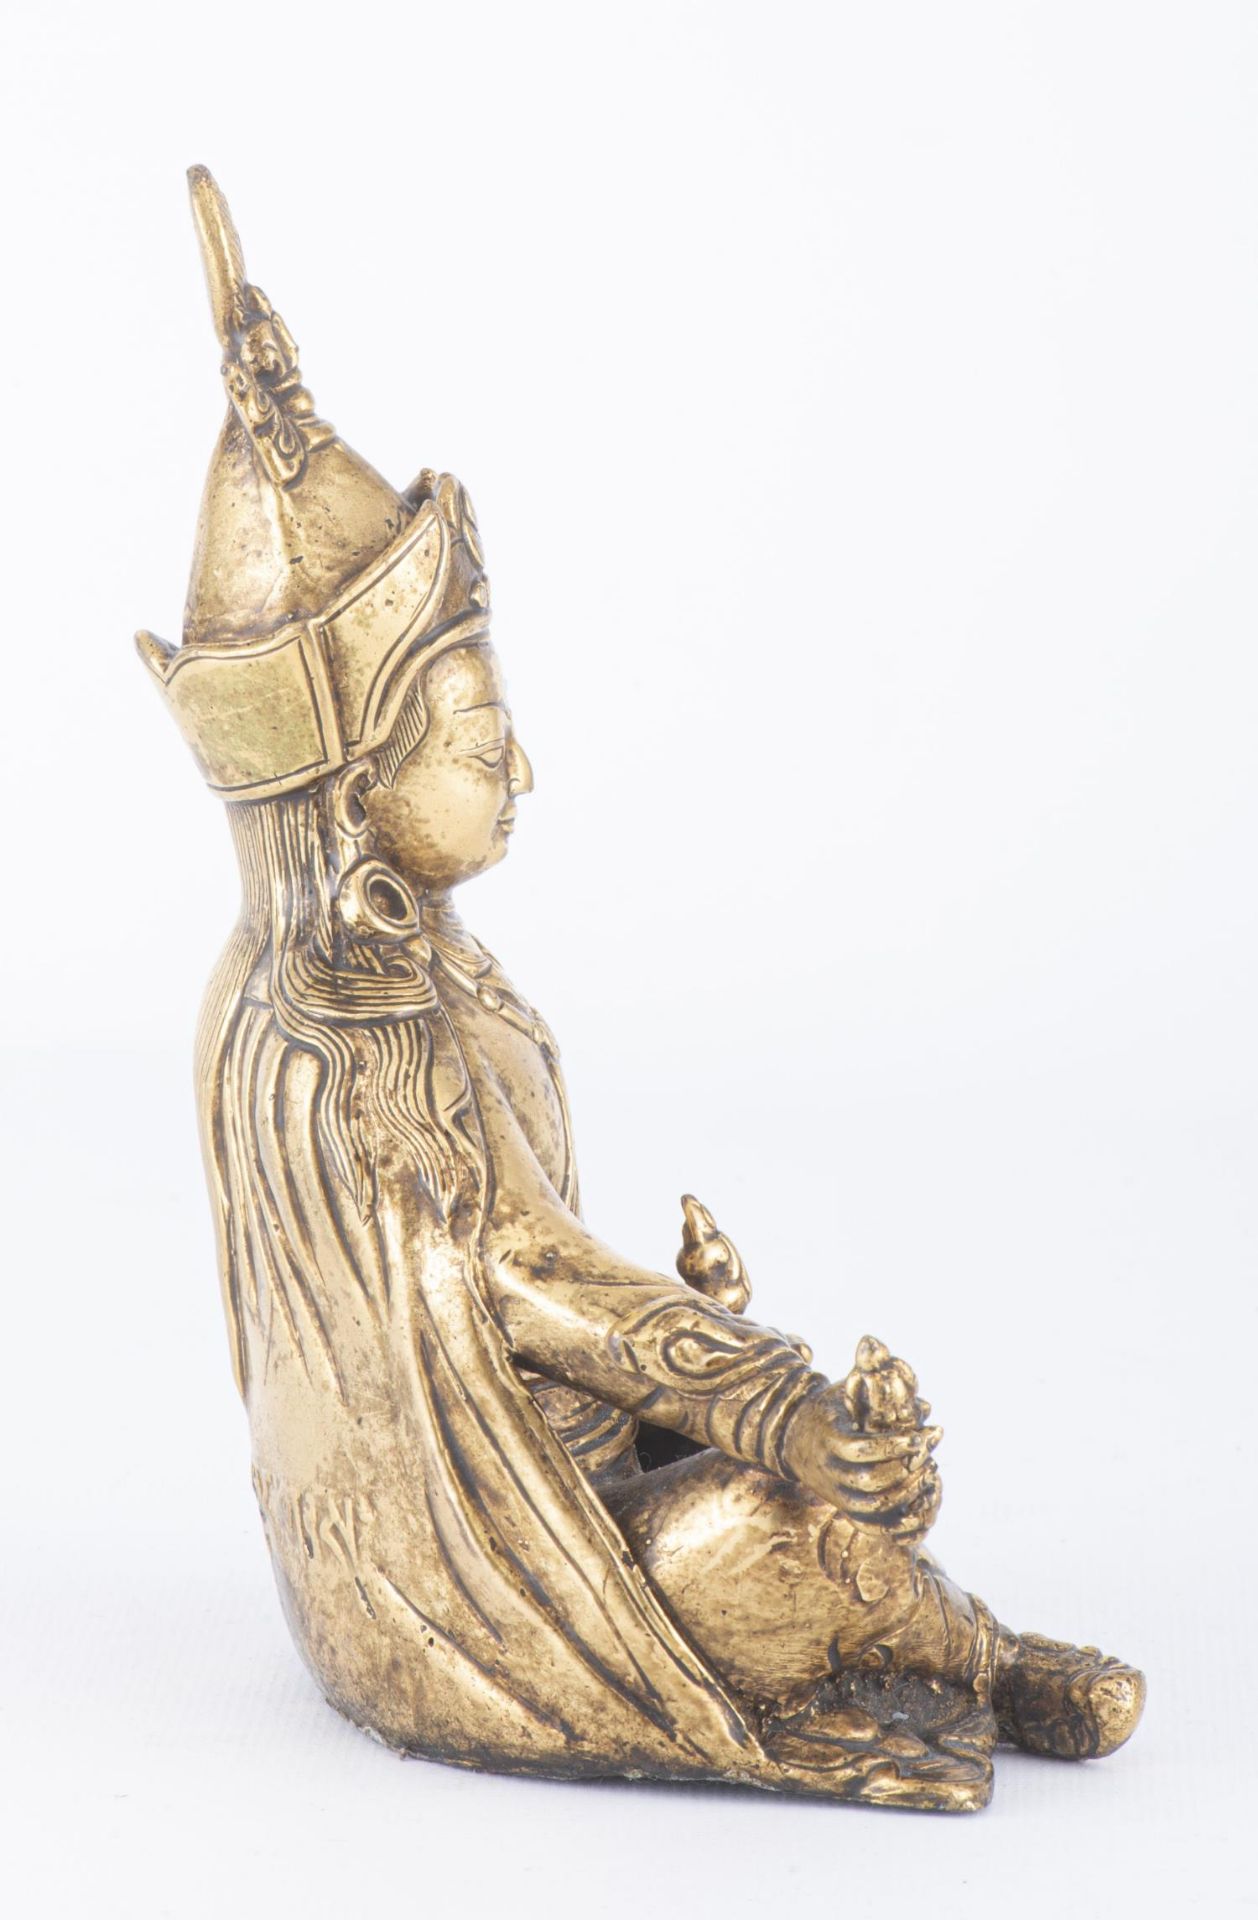 Lama du Tibet assis en bronze dor&amp;eacute;, XIX&amp;egrave;me... - Image 2 of 9